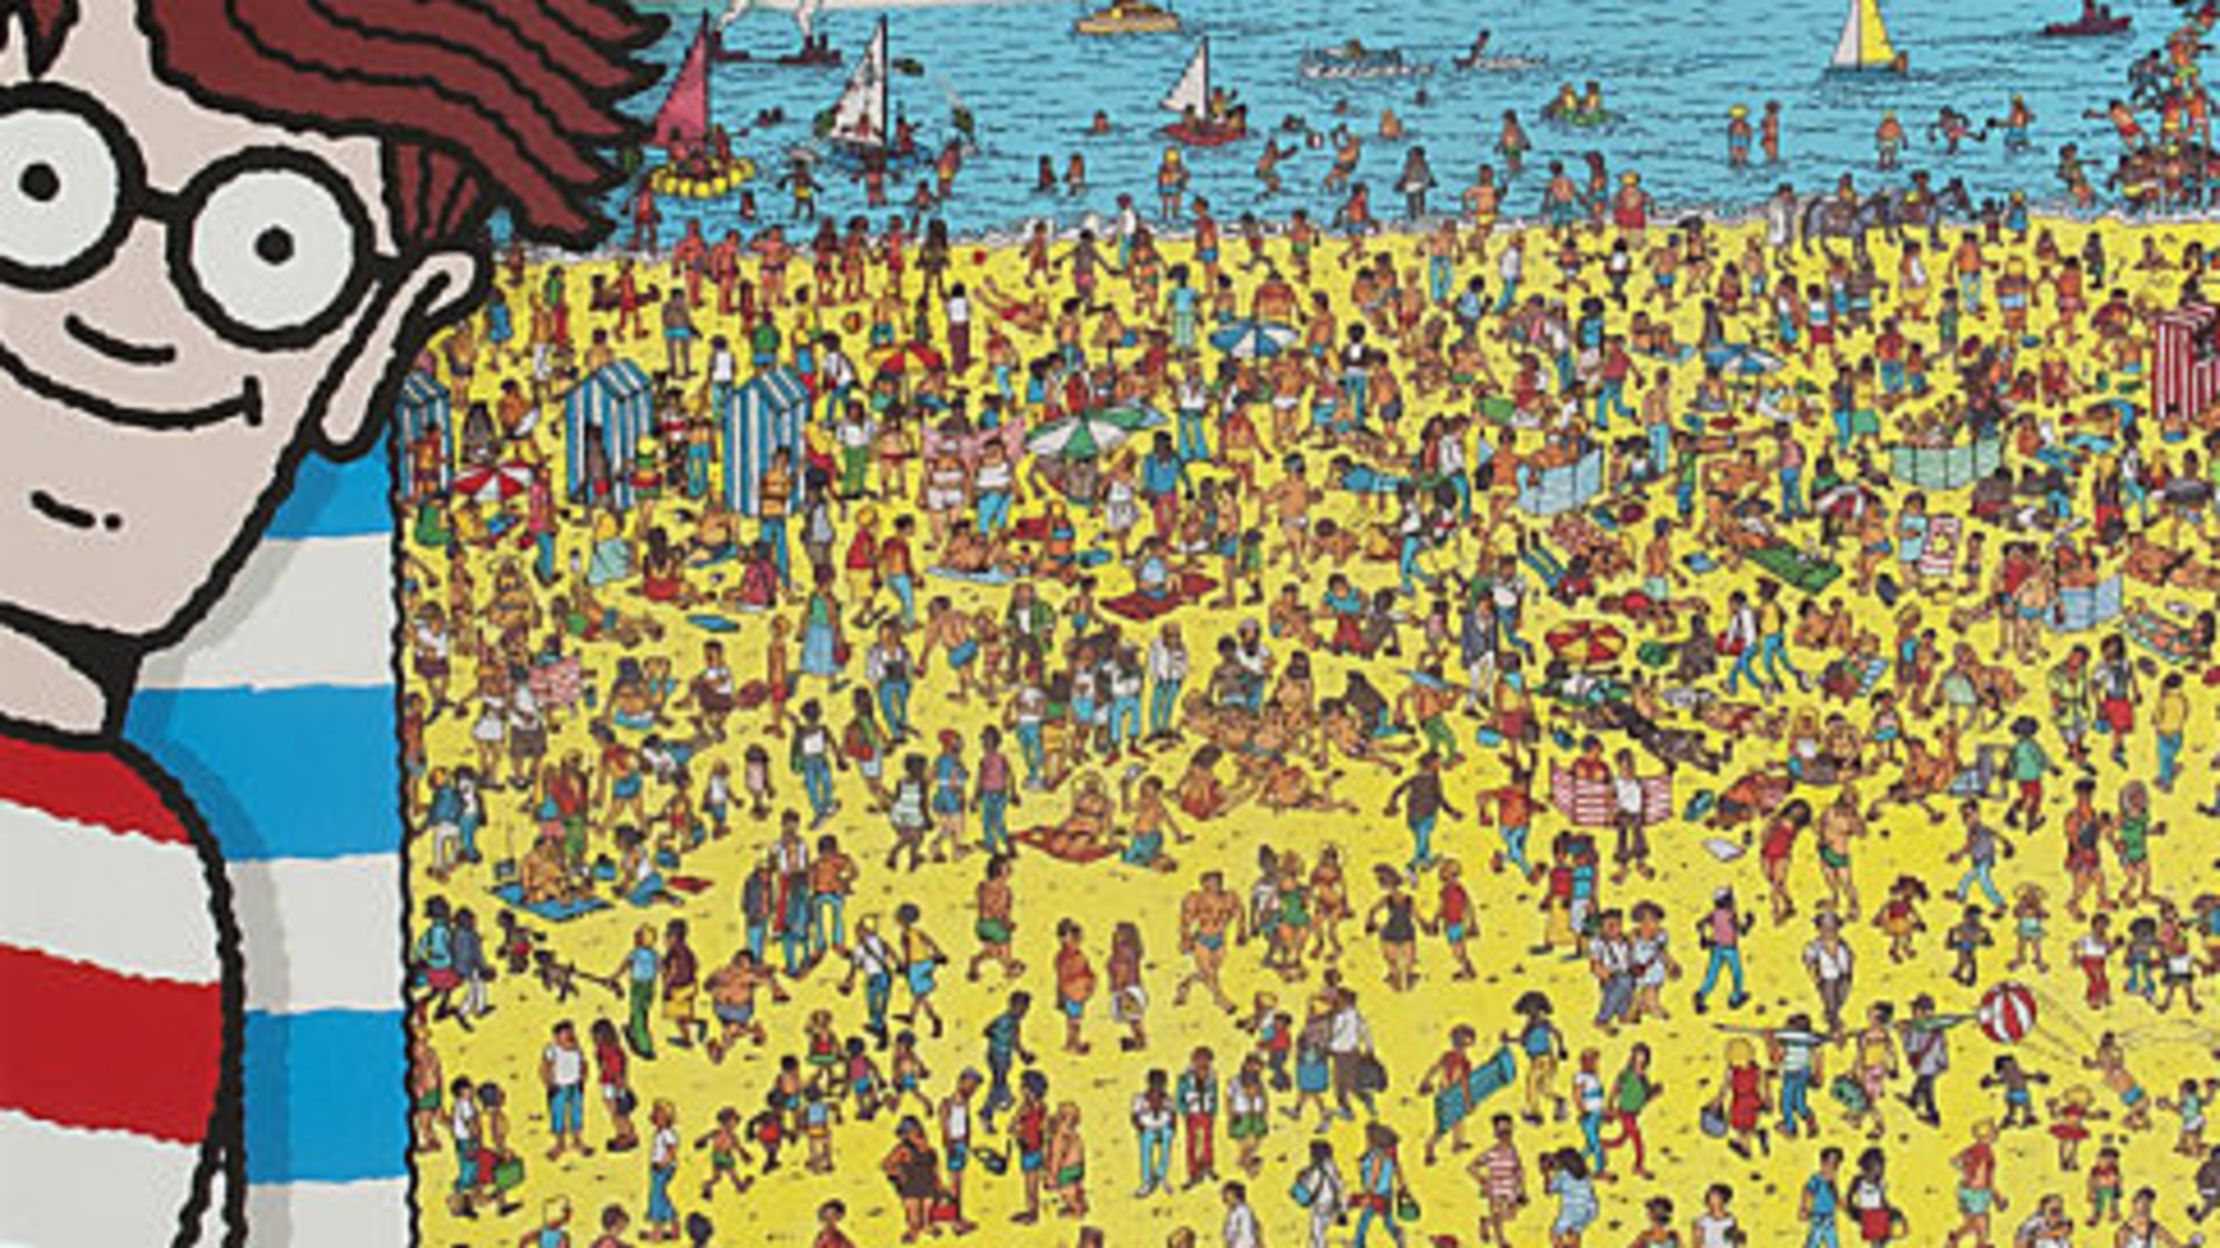 Christmas Party Nudist Beach - Waldo's Topless Beach Scandal | Mental Floss